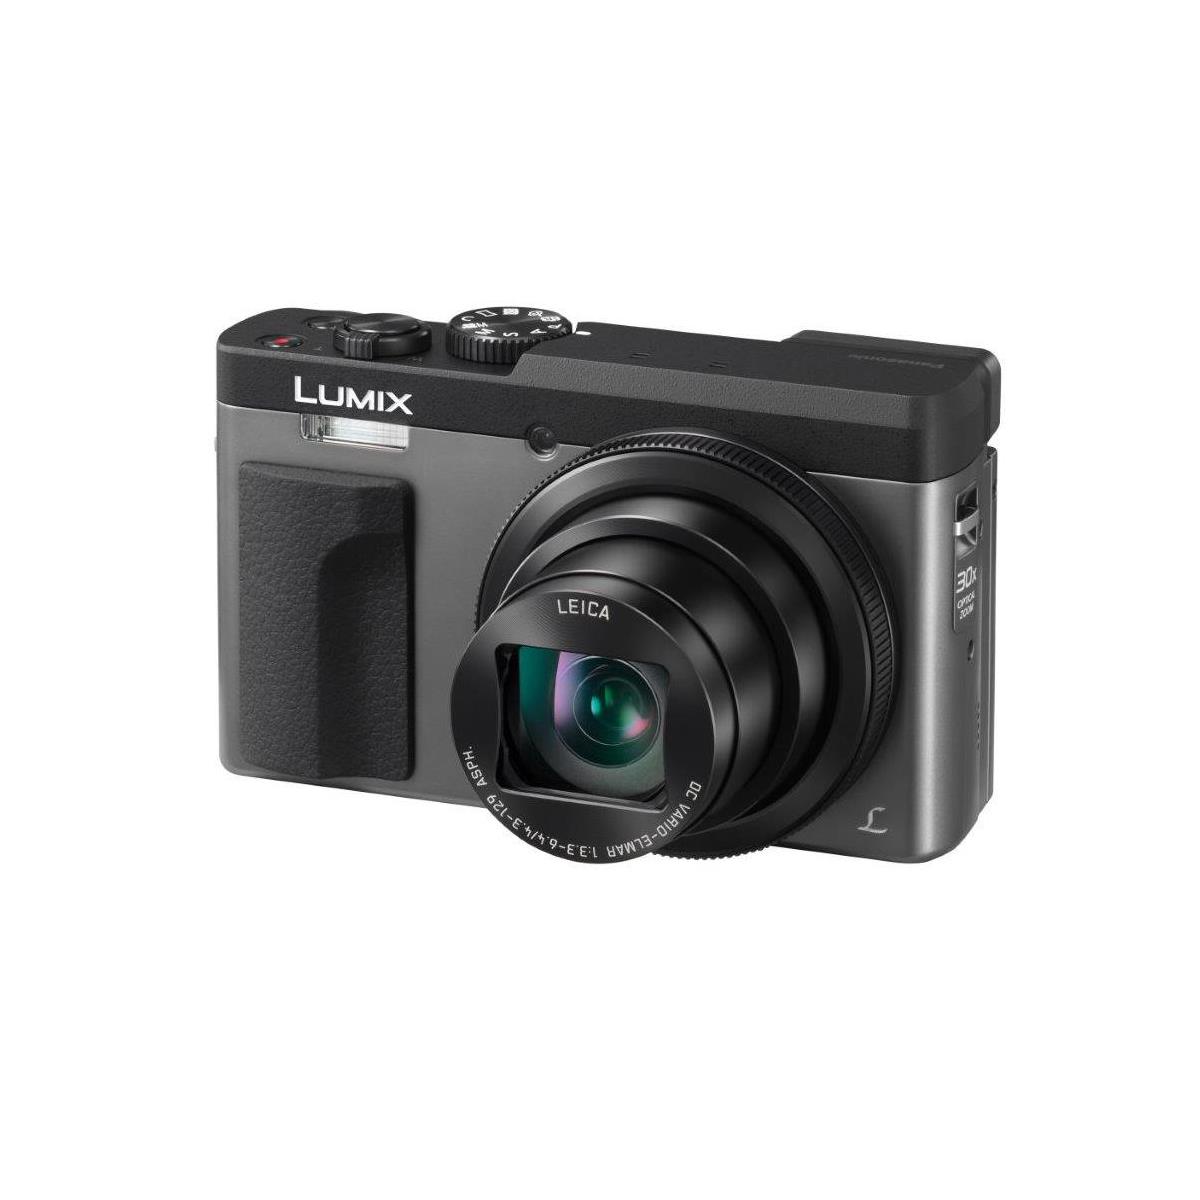 NEW from Panasonic: Lumix DG Leica Vario-Elmarit 8-18mm Lens & DMC-ZS70 Camera – Available for Pre-order!